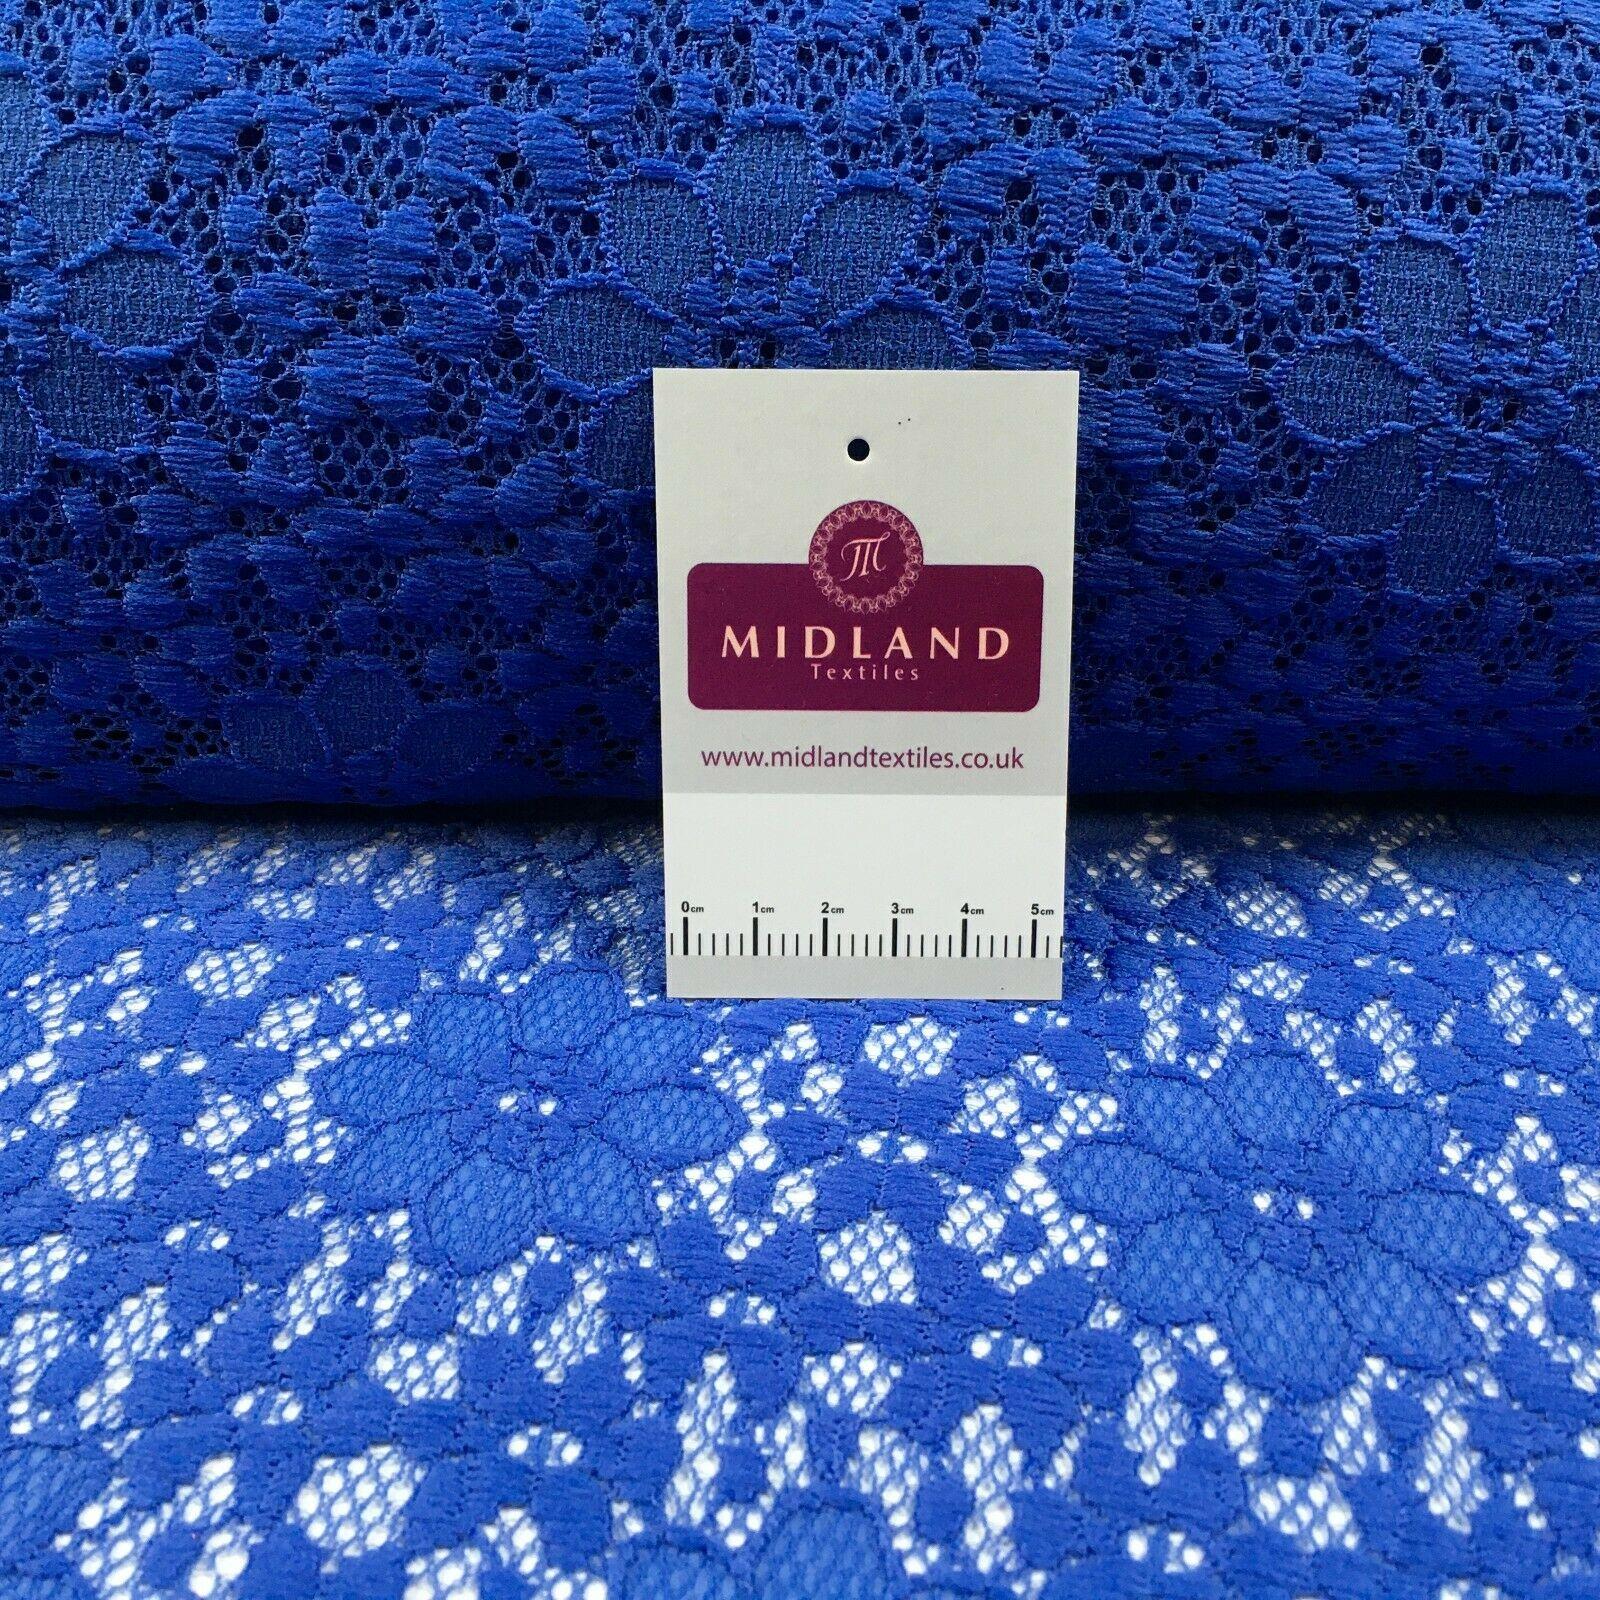 Blue Soft floral Net dress Scalloped edge Fabric 140 cm M186-58 Mtex